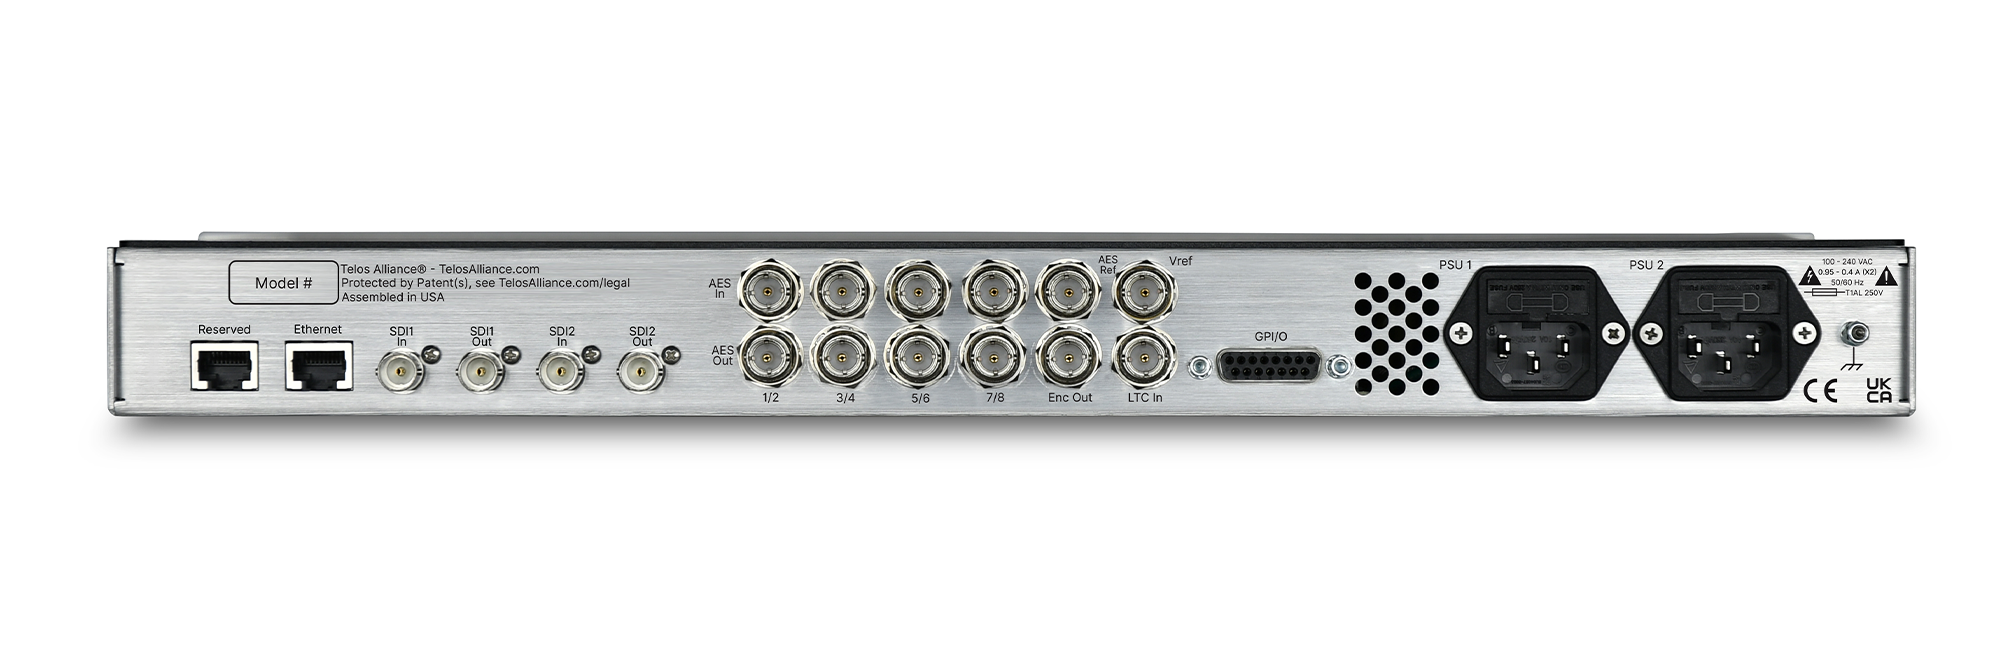 Linear Acoustic AERO.20 DTV Audio Processor